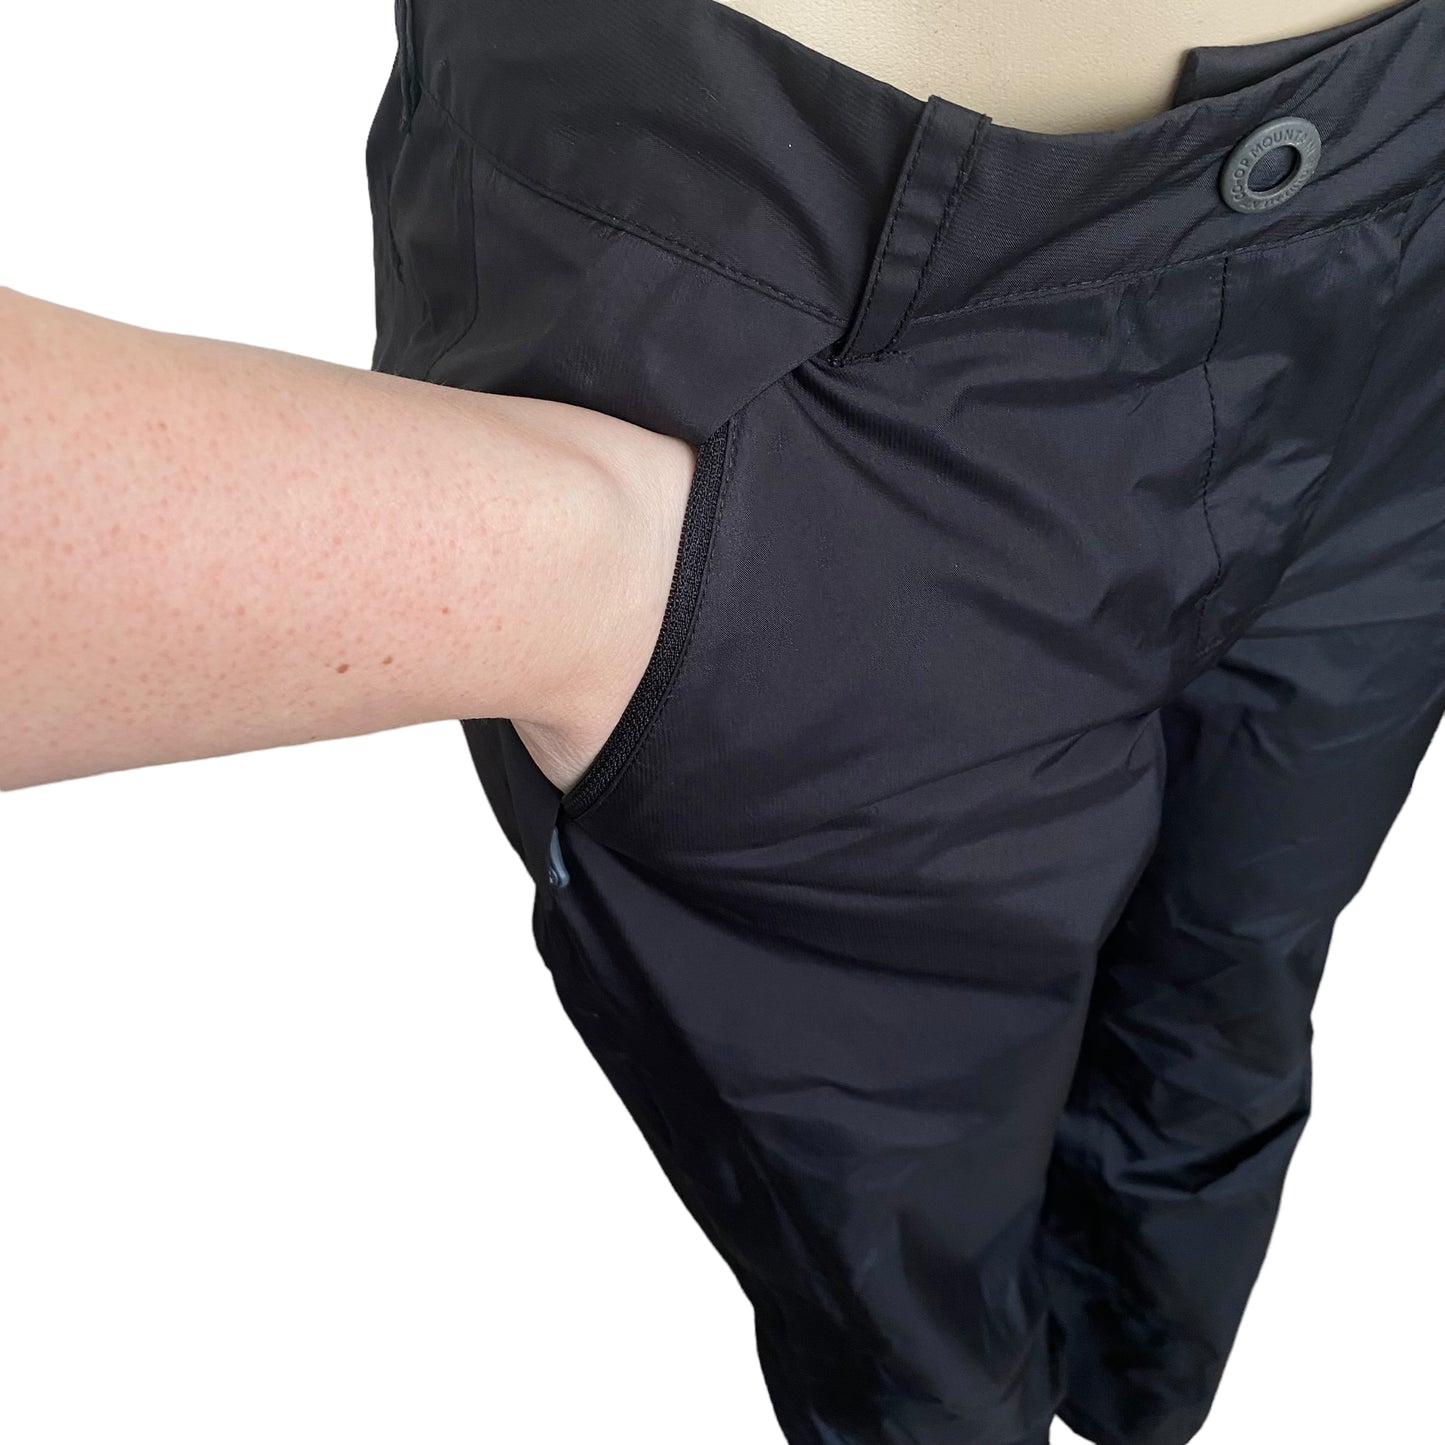 MEC Splash Waterproof Pants Black Size 6